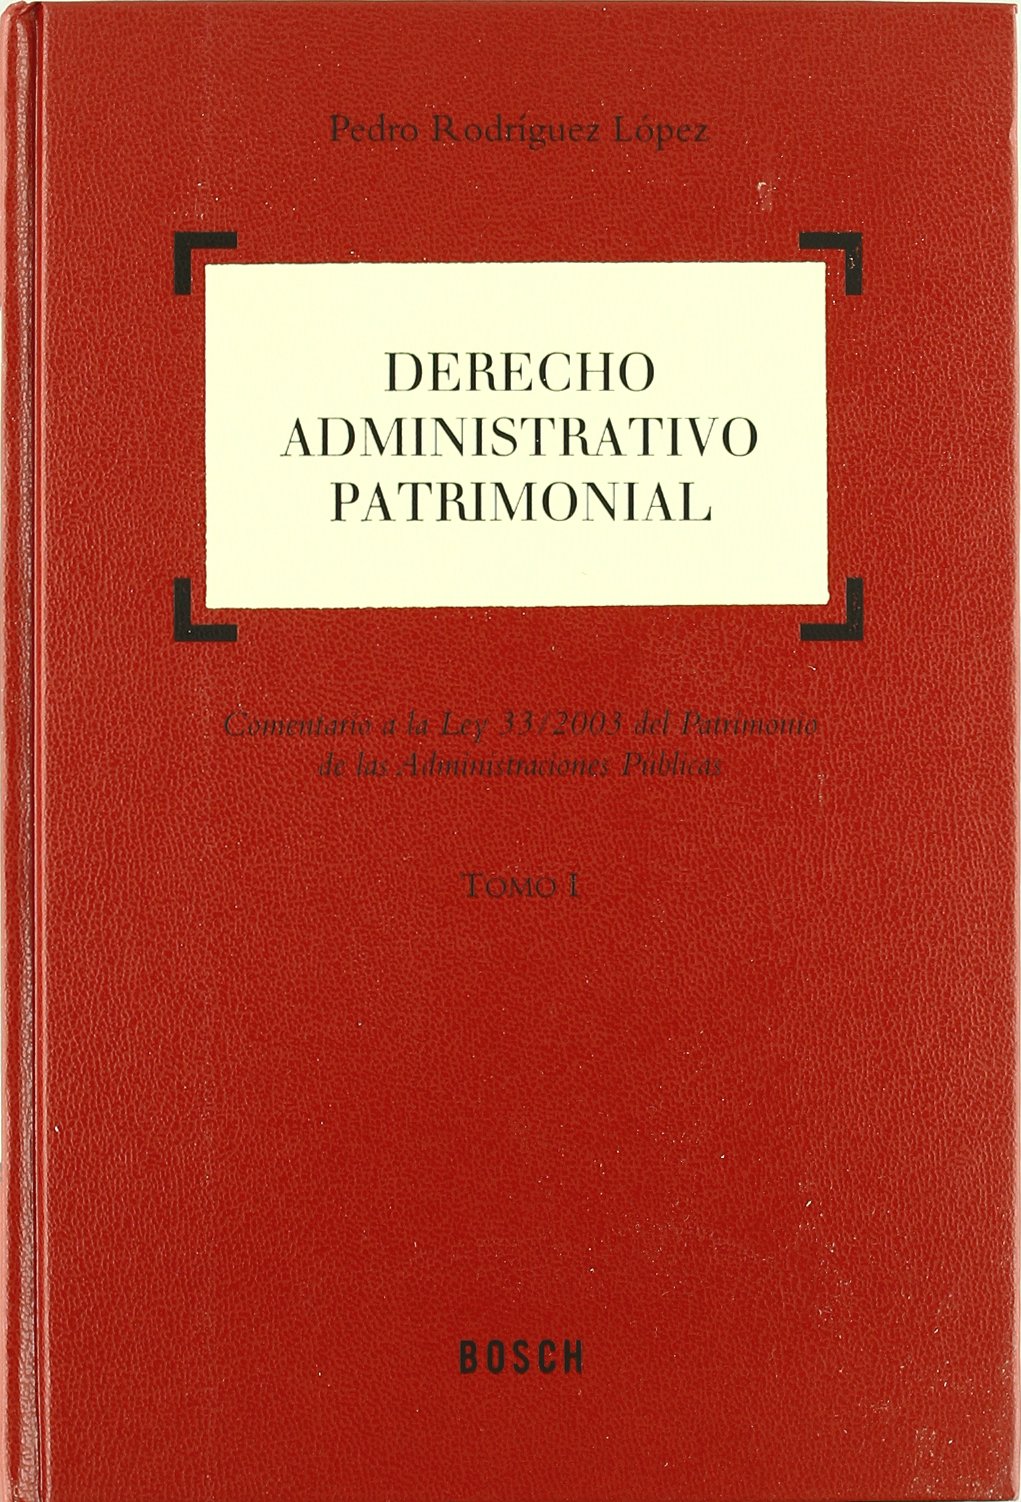 Derecho administrativo patrimonial